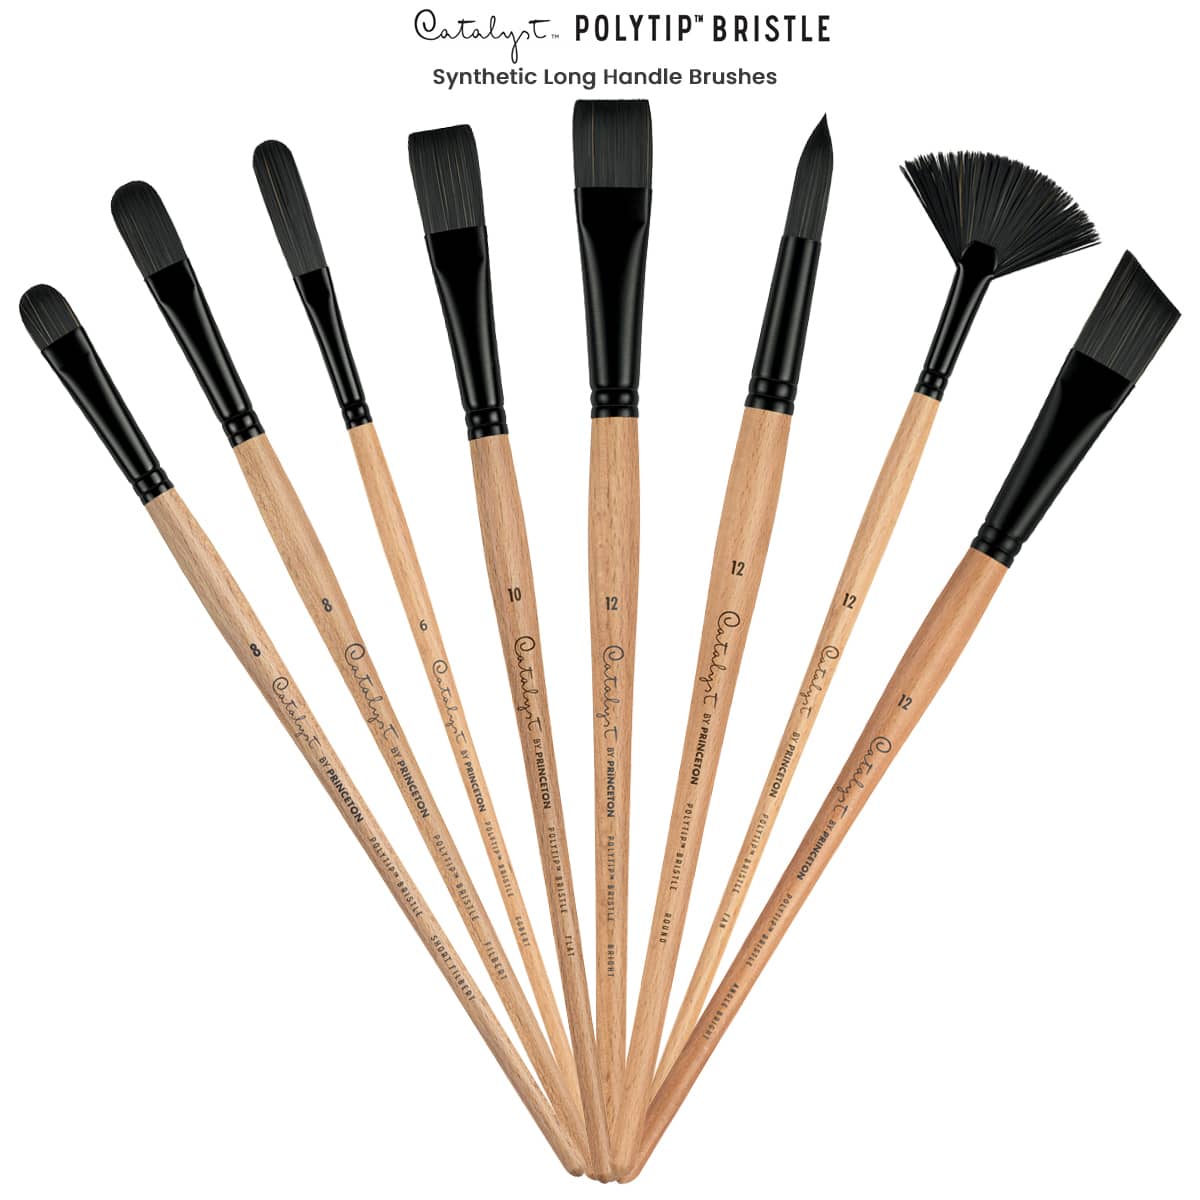 Princeton Catalyst Polytip Long Handle Brushes